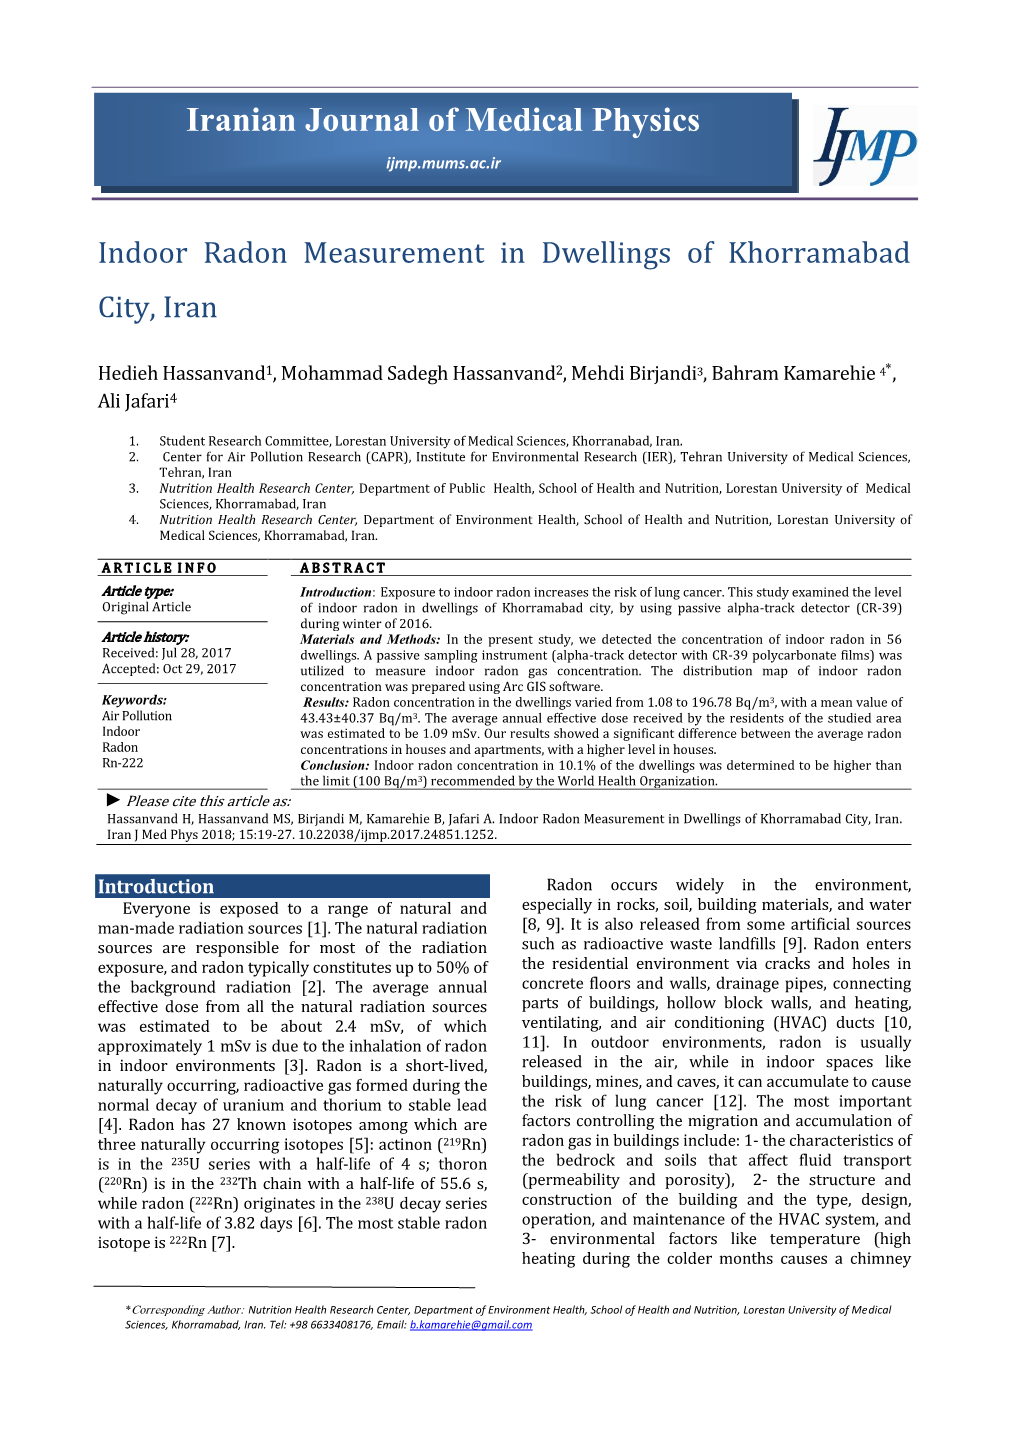 Indoor Radon Measurement in Dwellings of Khorramabad City, Iran